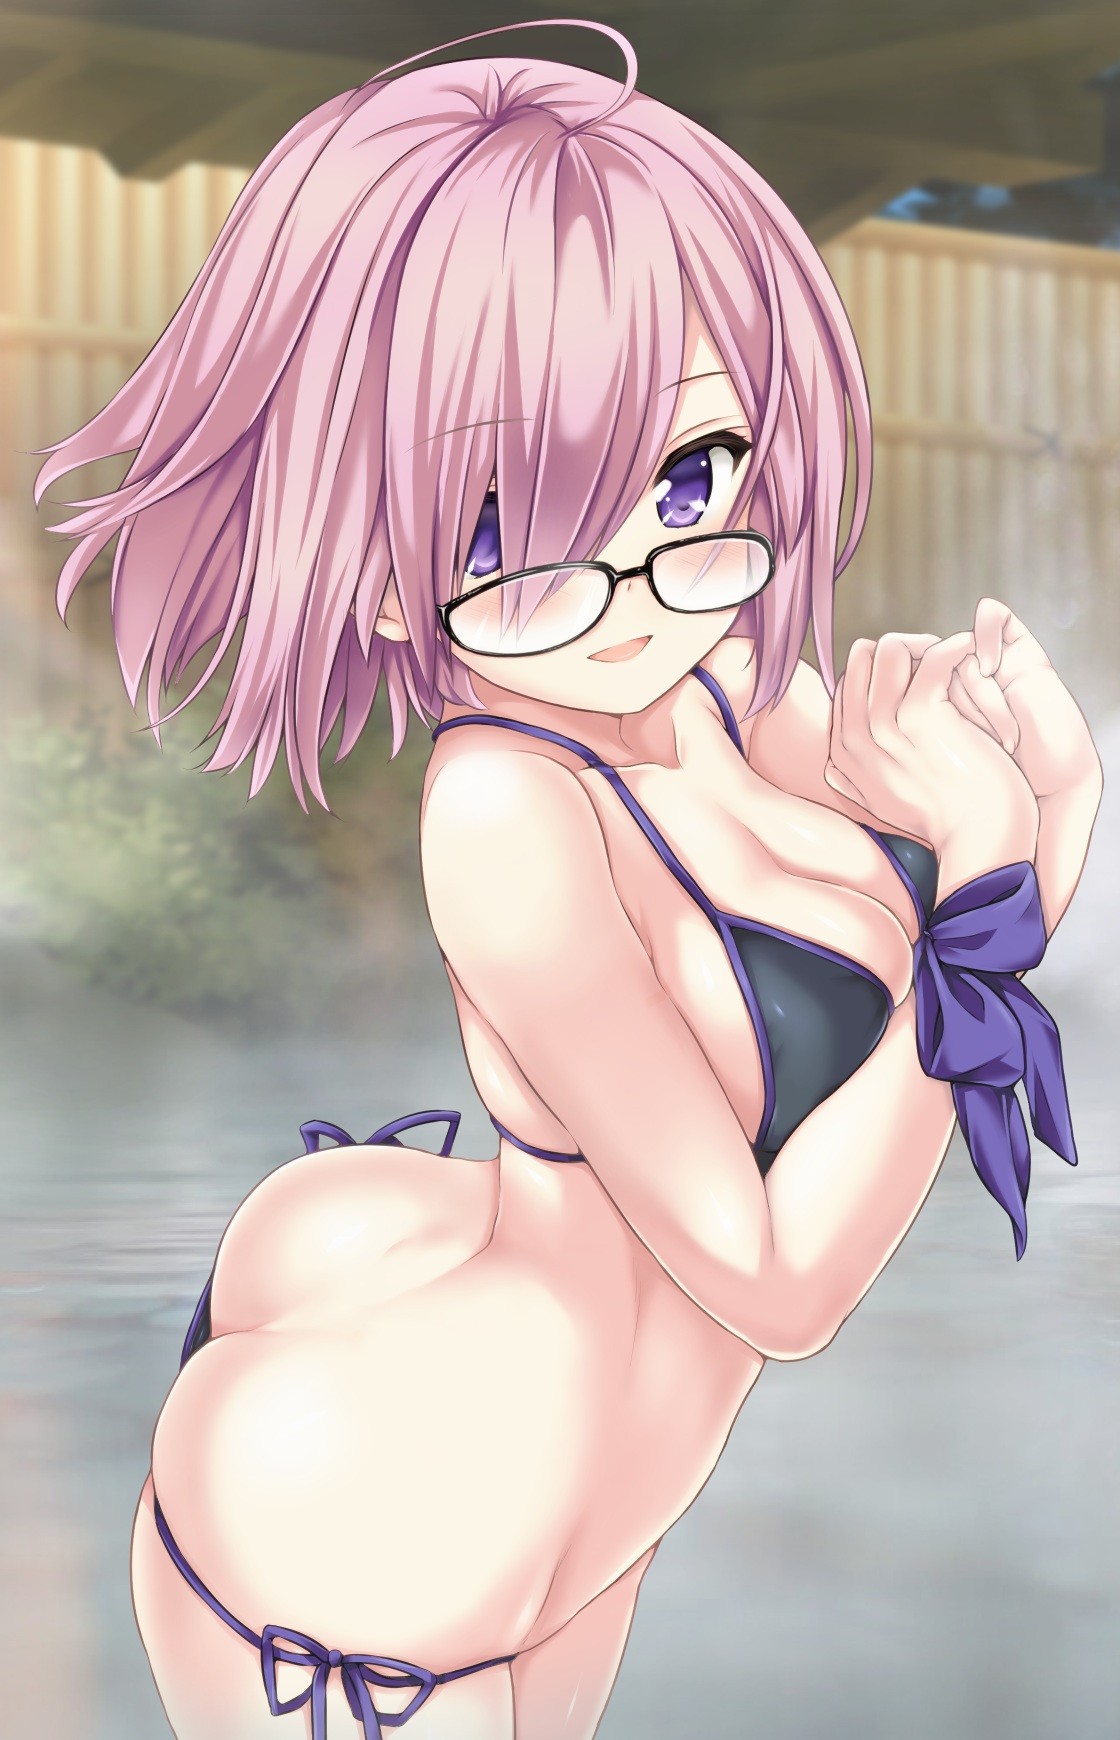 Anime 1120x1740 ass bikini Fate/Grand Order glasses pink hair purple eyes Mash Kyrielight Fate series anime girls short hair string bikini cleavage